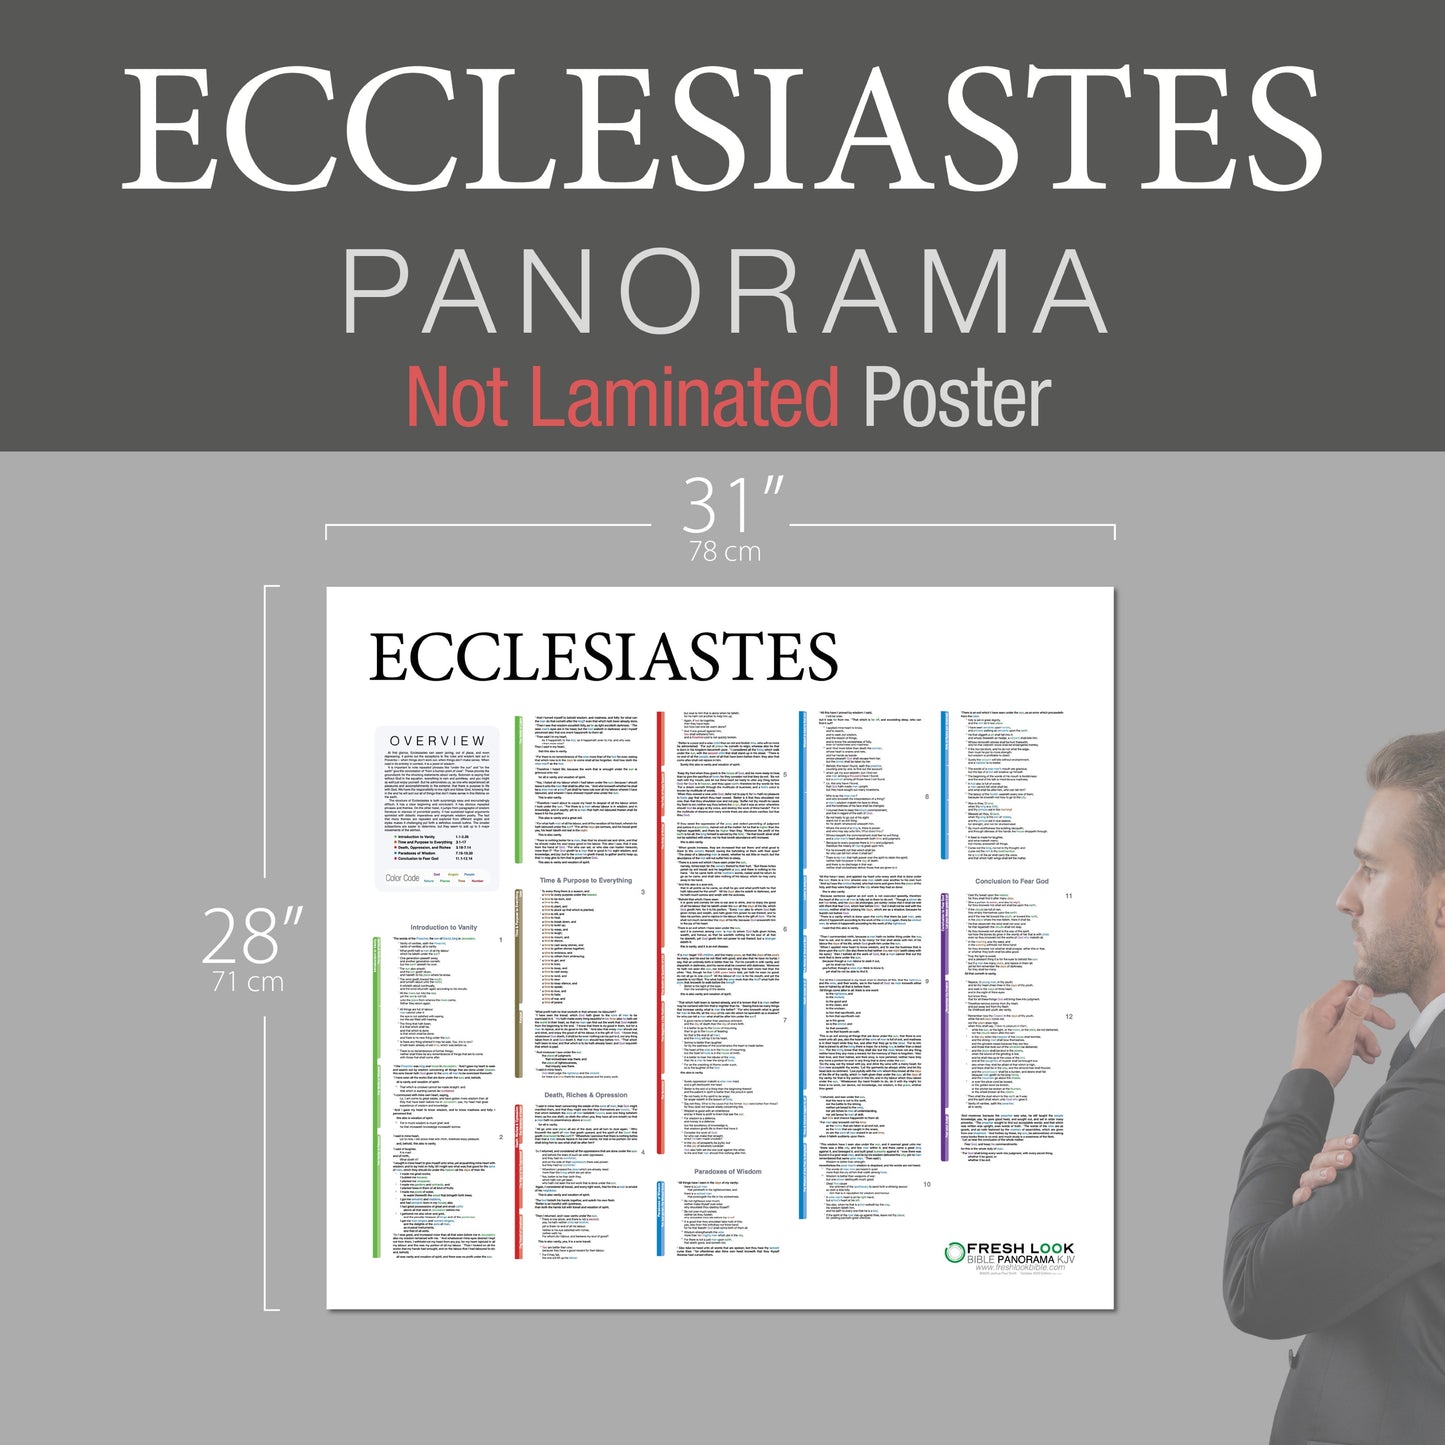 Ecclesiastes Panorama Not Laminated